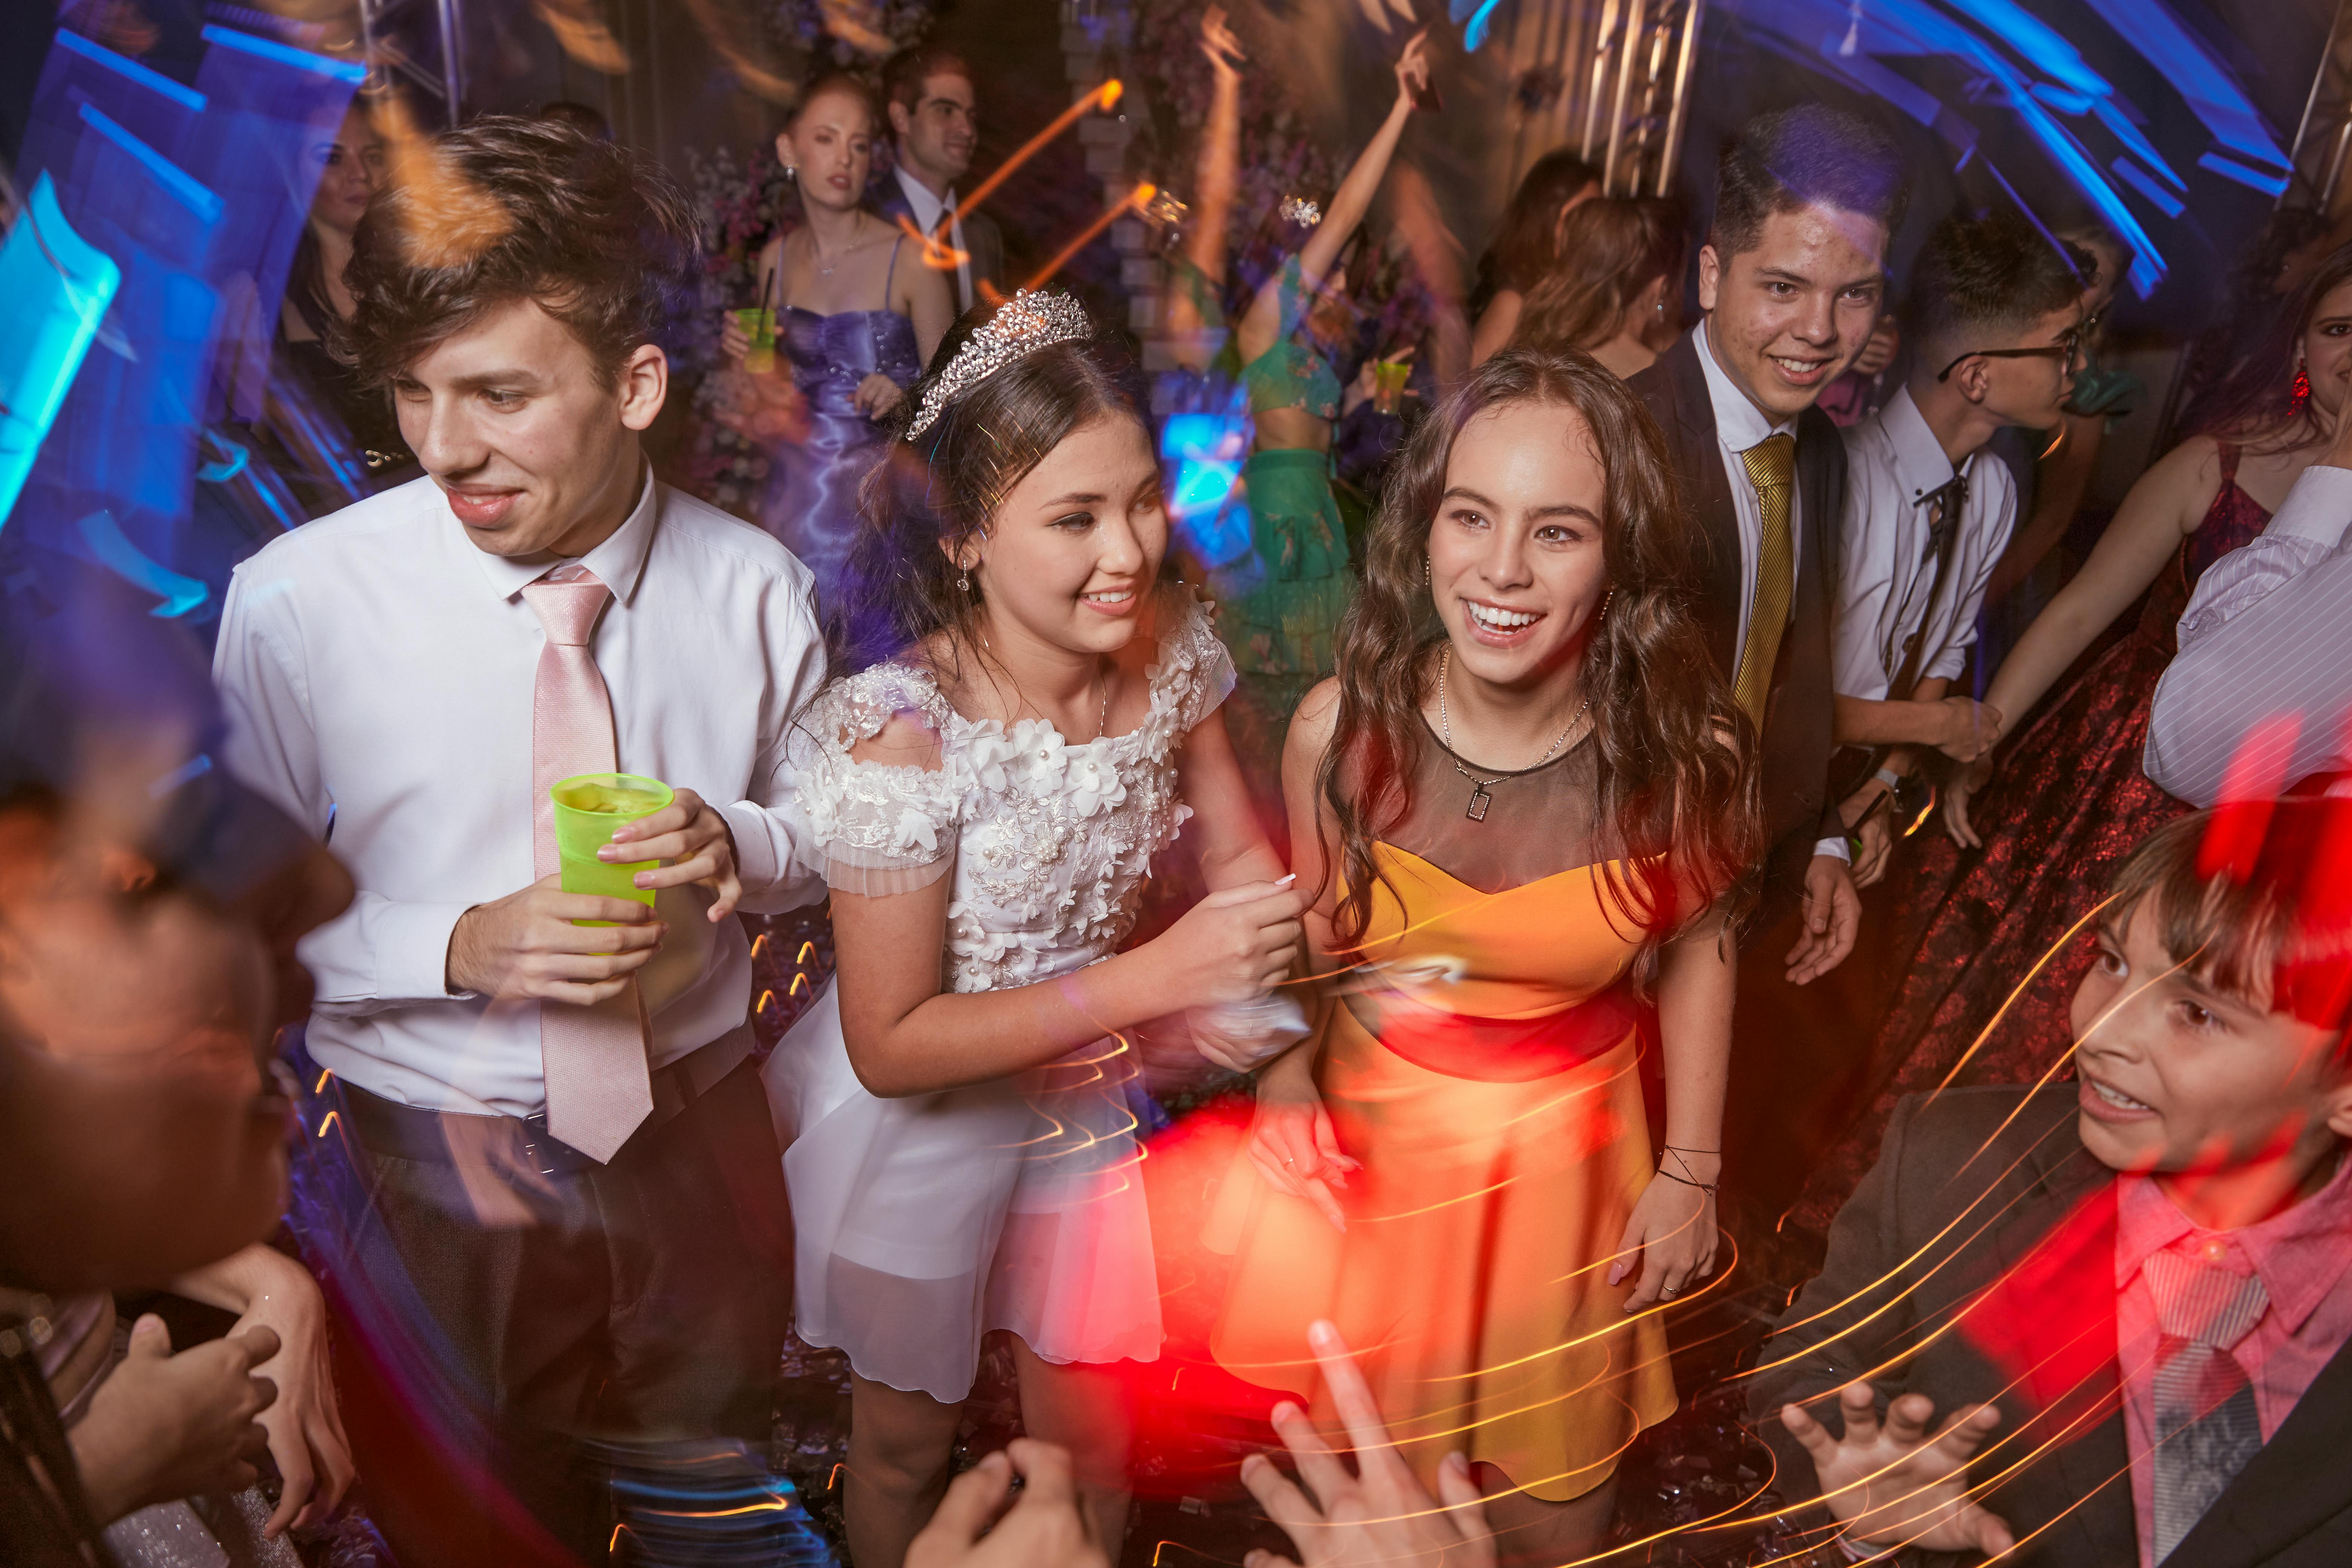 Teenagers during senior prom night | Source: Pexels